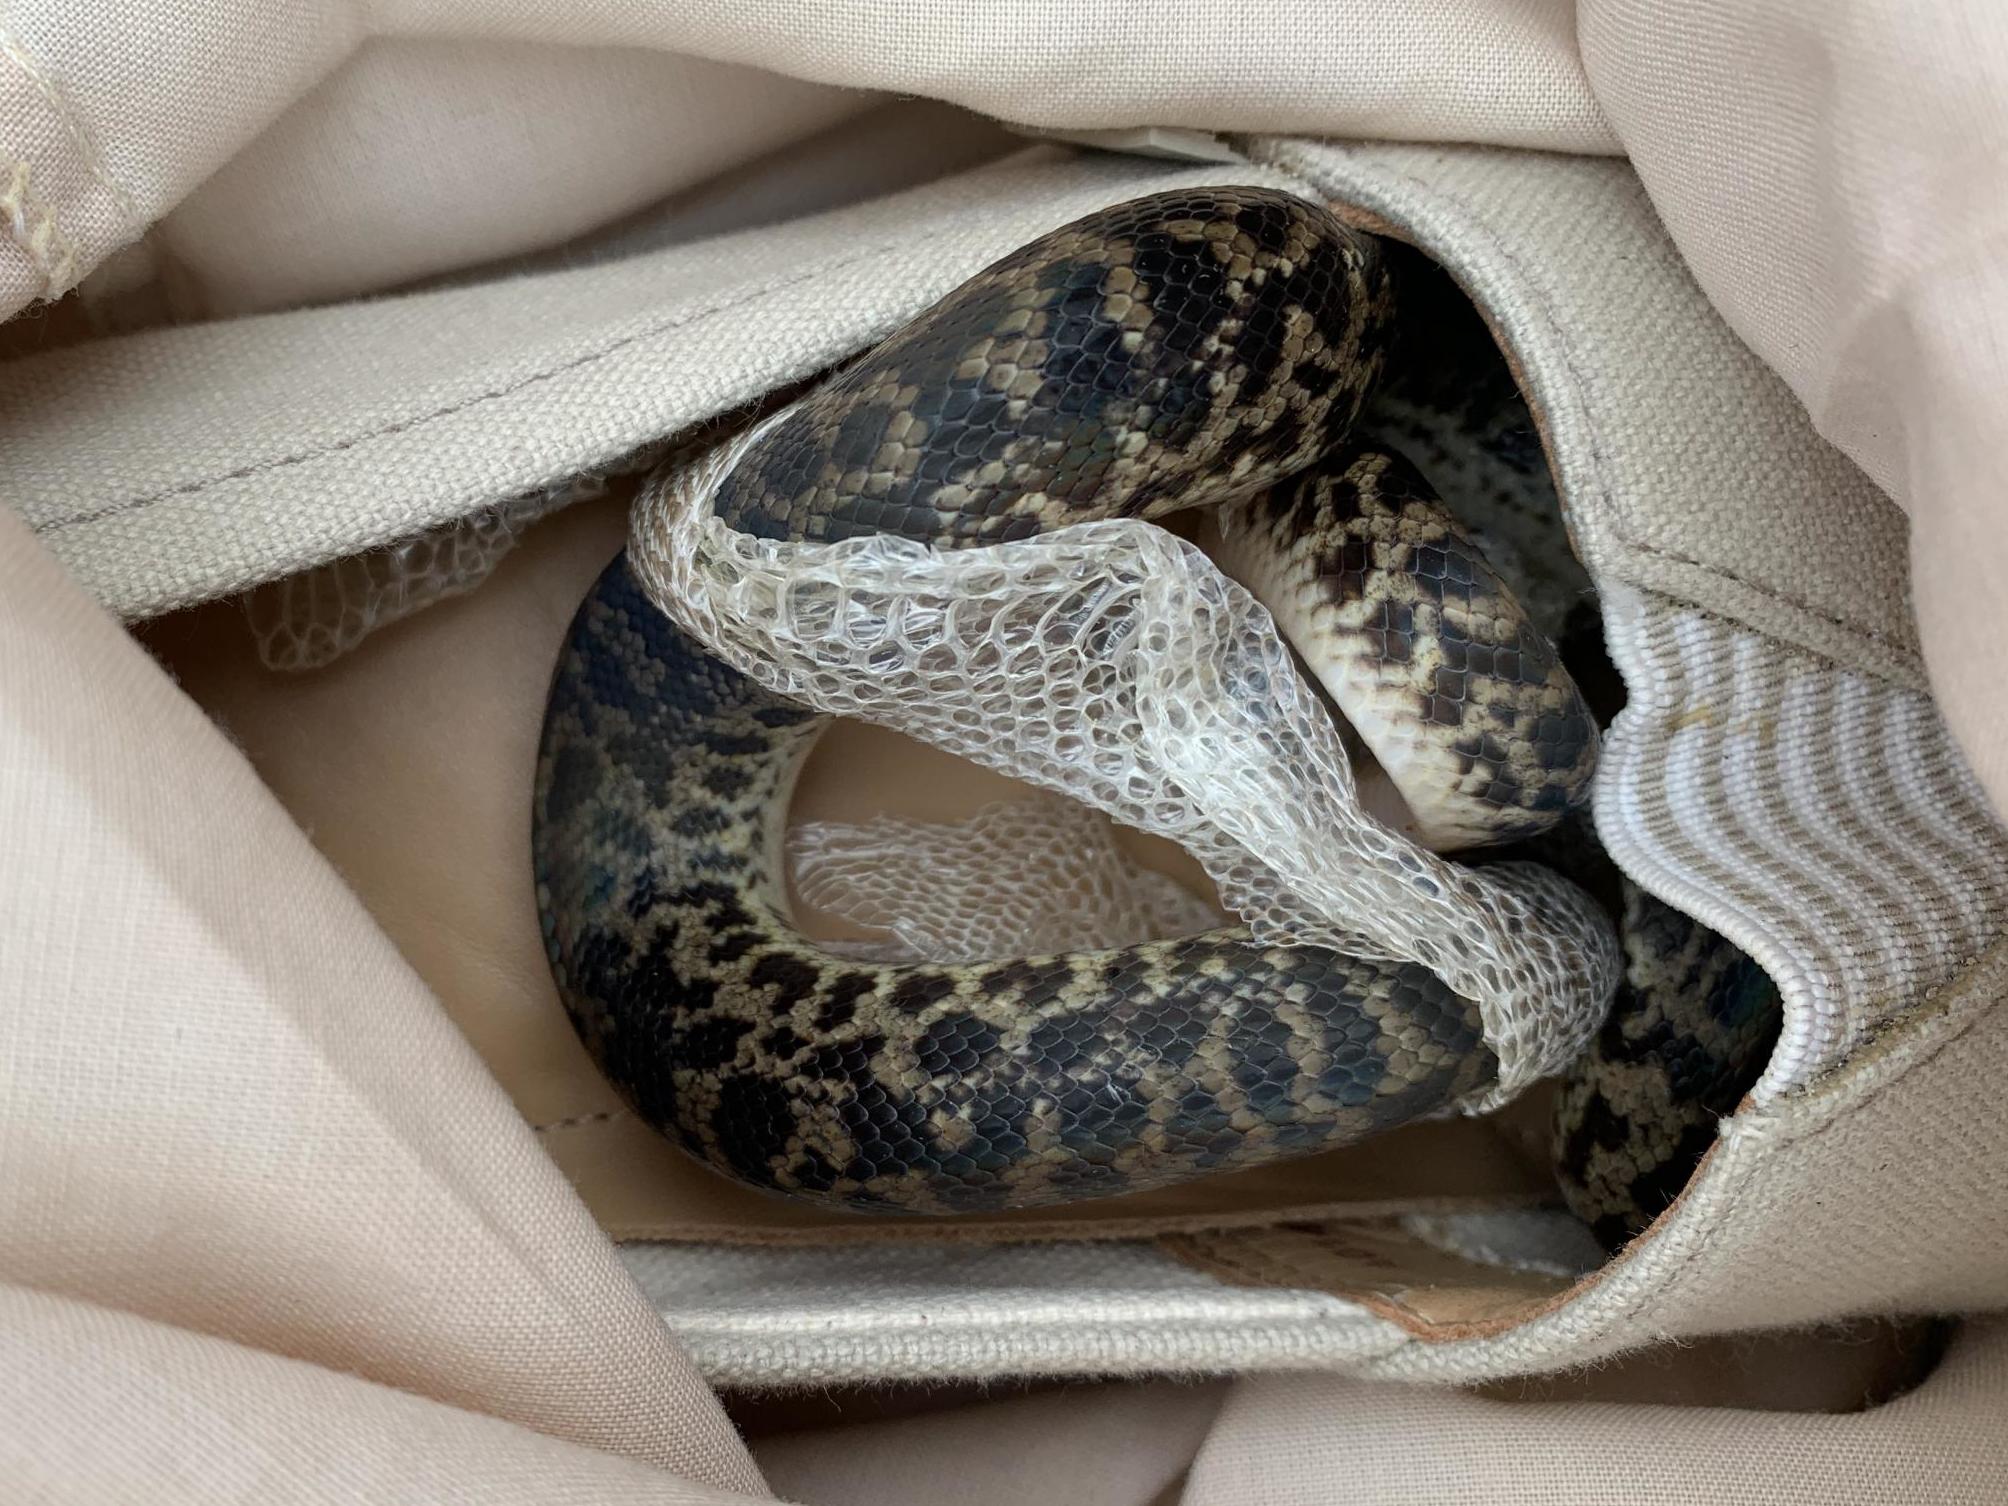 Spotted python inside slip-on